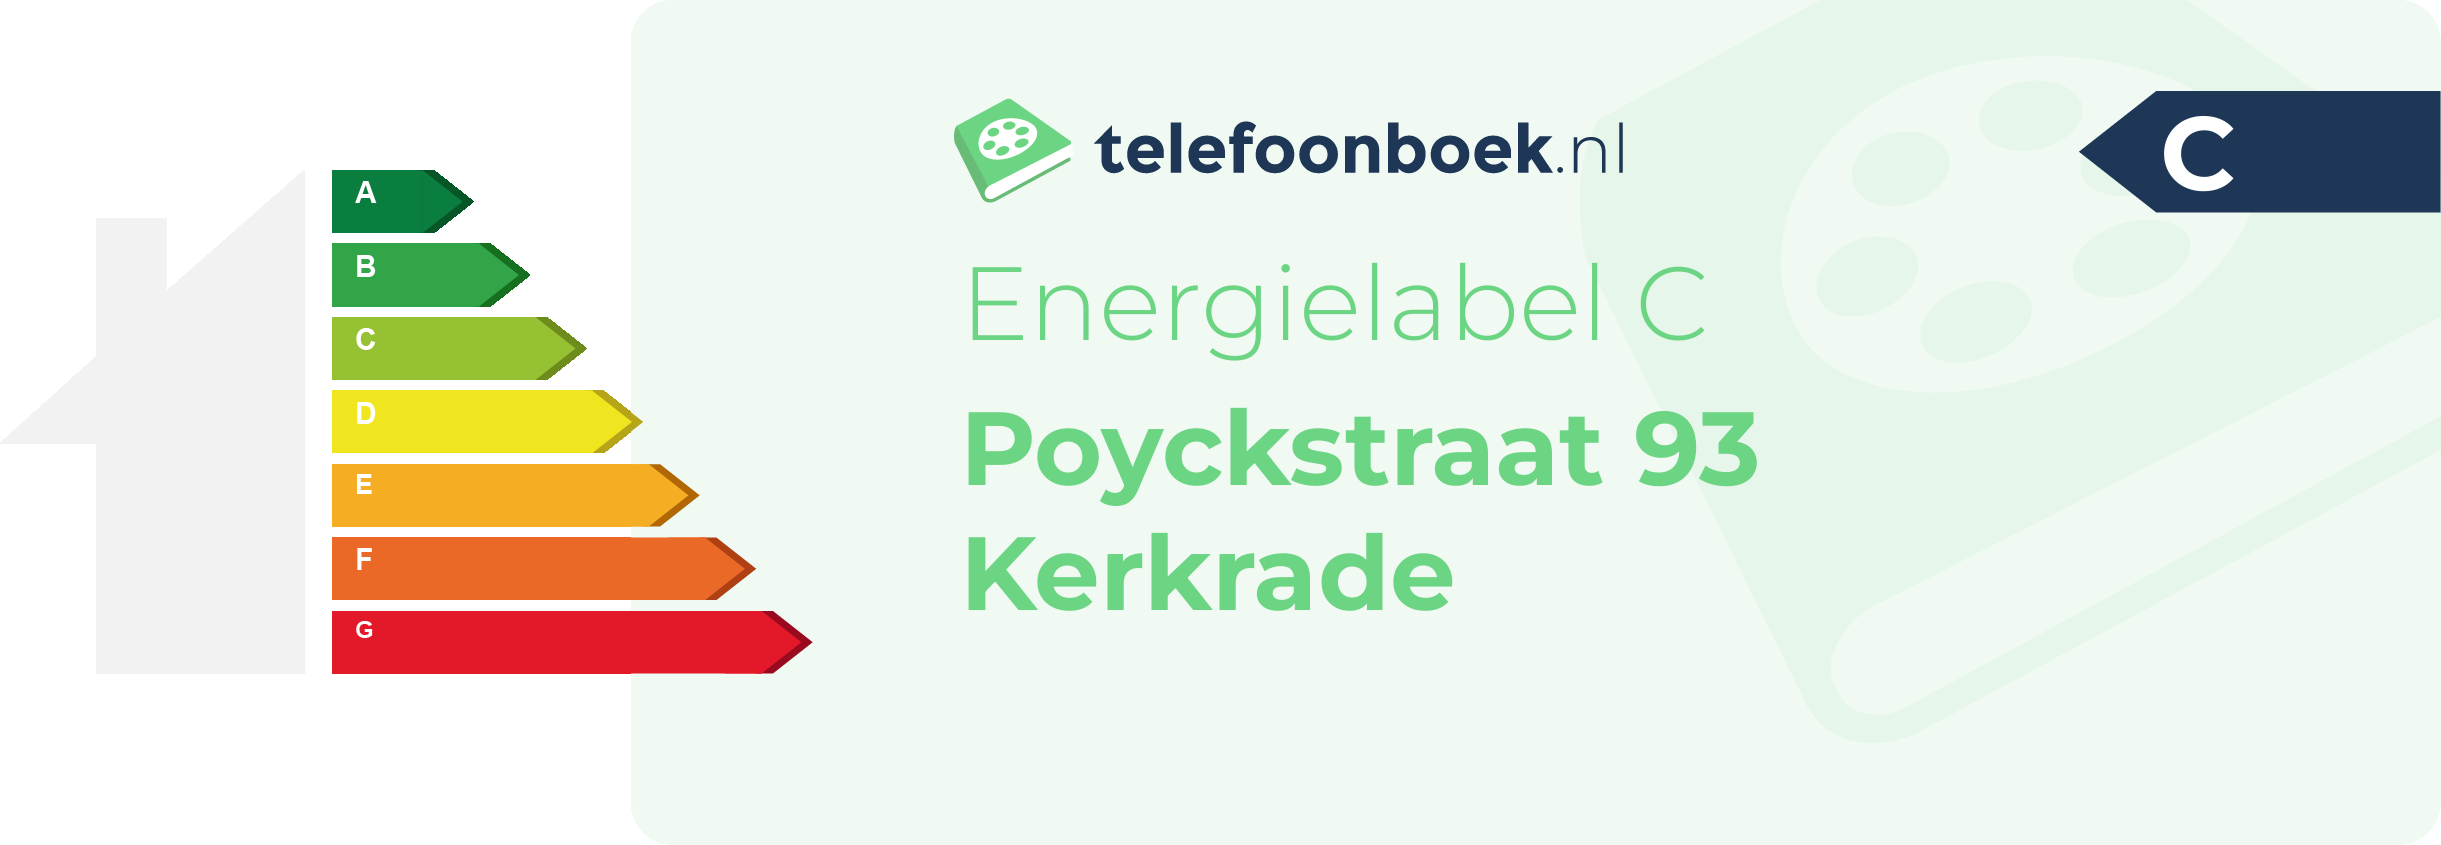 Energielabel Poyckstraat 93 Kerkrade